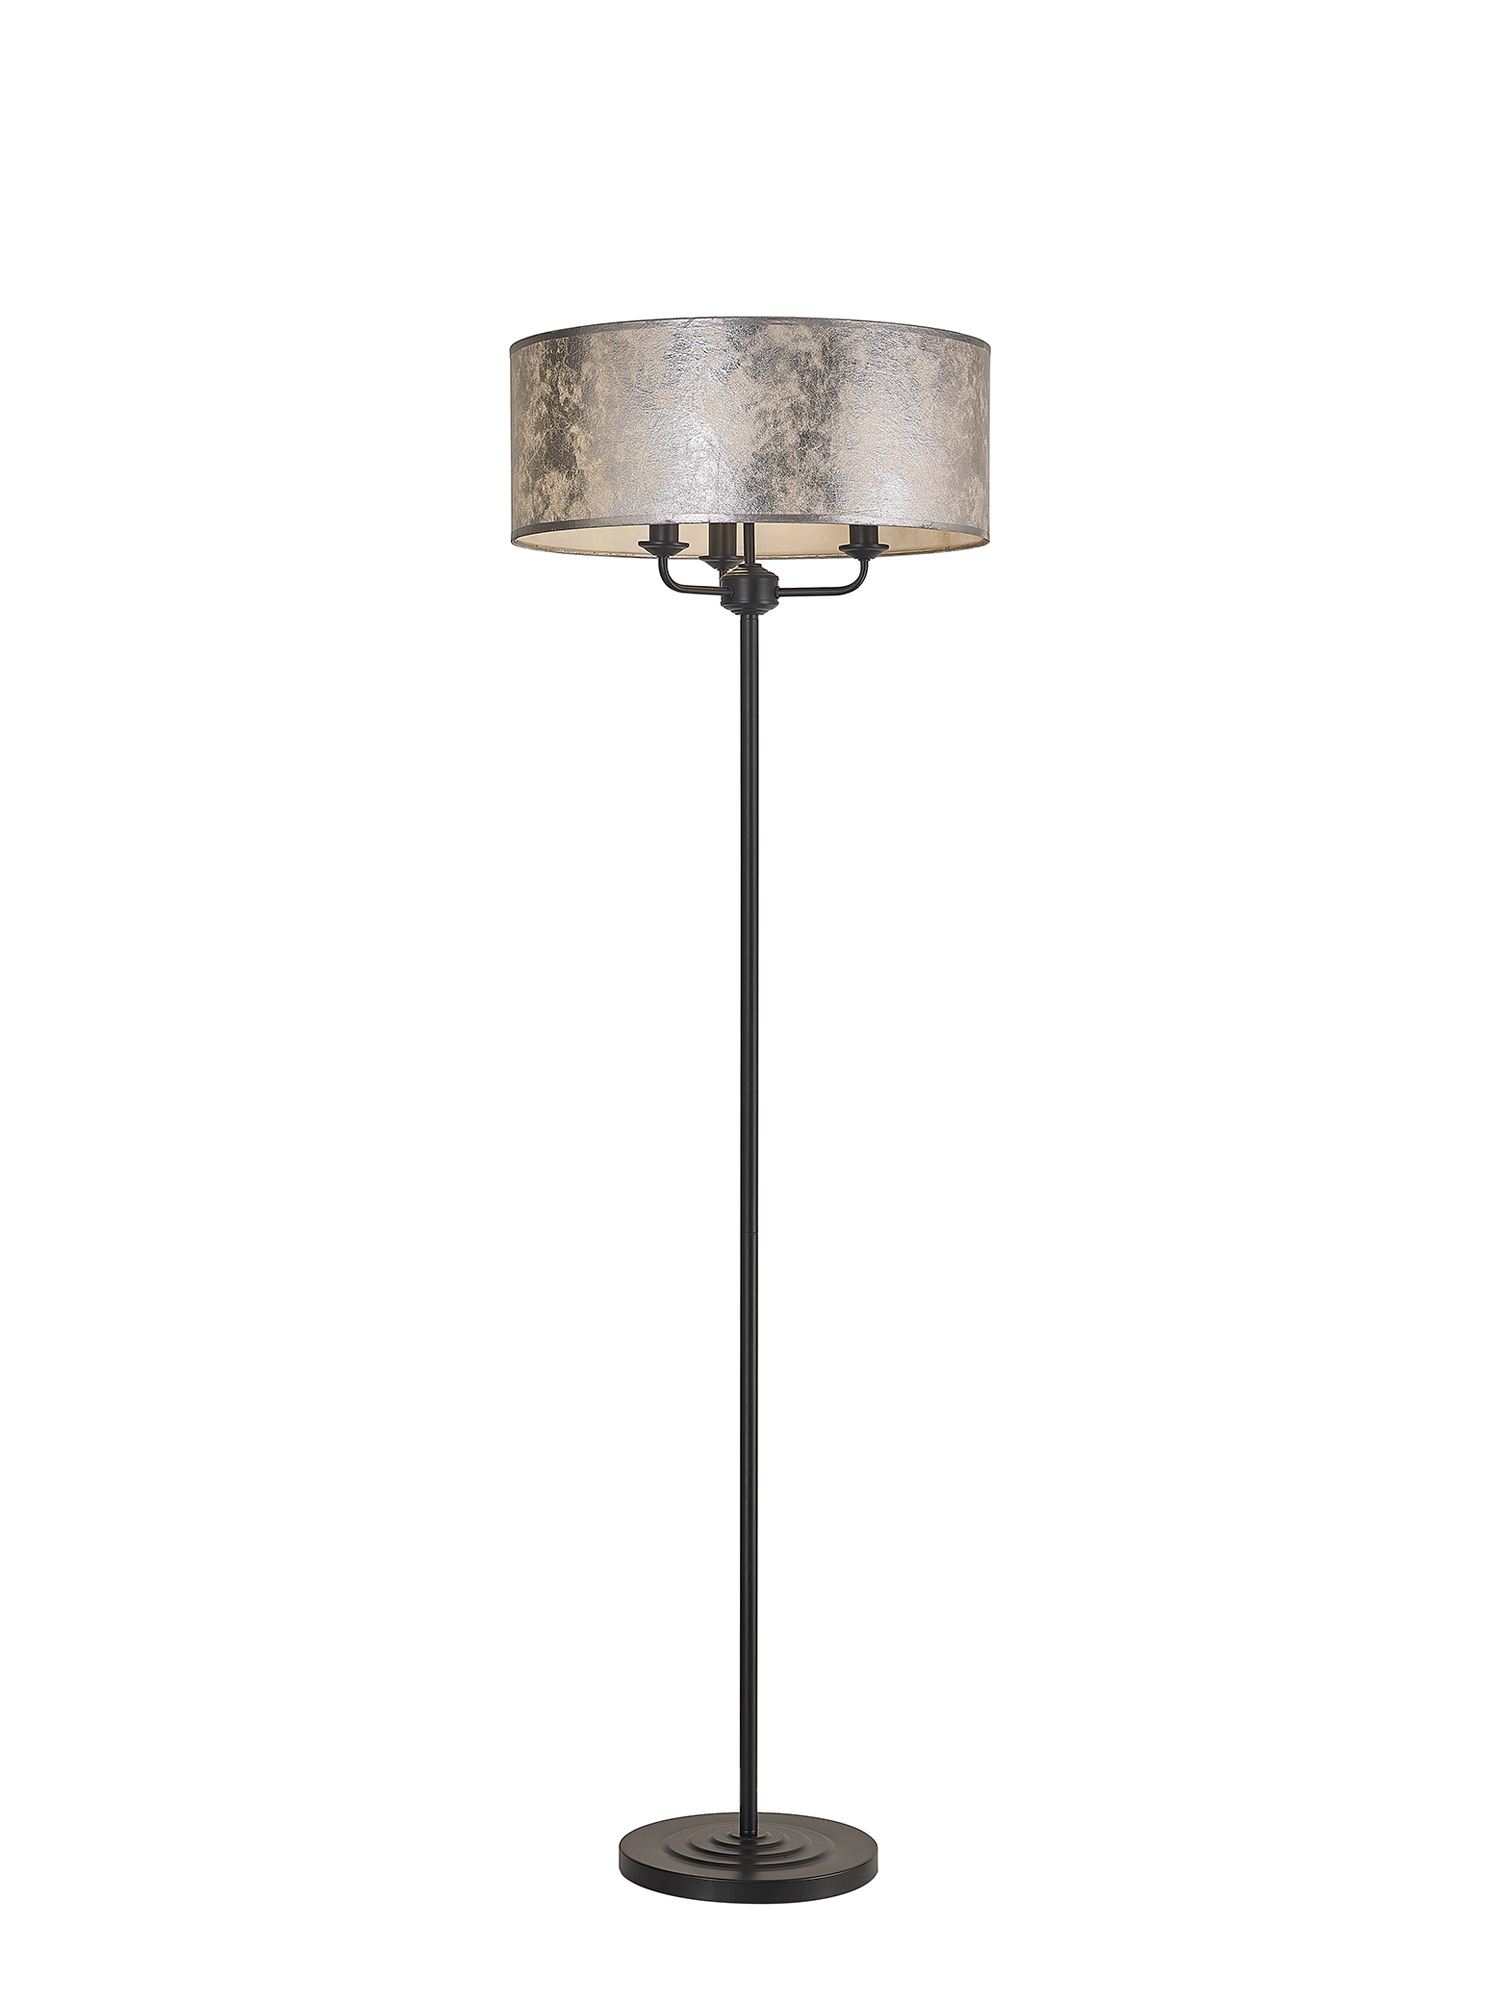 DK1072  Banyan 45cm 3 Light Floor Lamp Matt Black, Silver Leaf